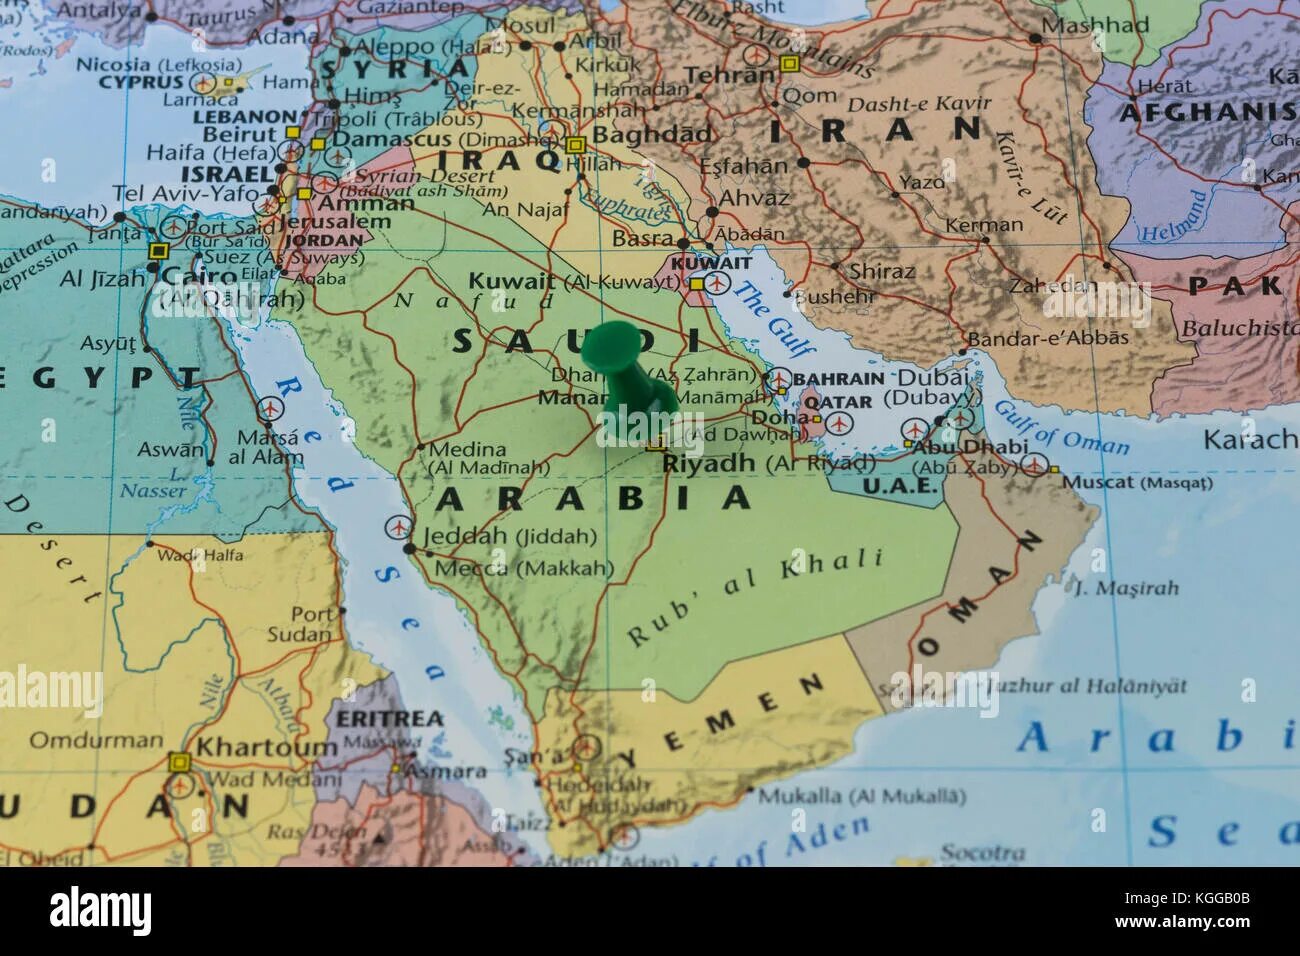 Мекка и медина на карте. Аравийский полуостров Саудовская Аравия. Эр Рияд на карте Саудовской Аравии. Политическая карта Аравийского полуострова. Государства Персидского залива на карте.